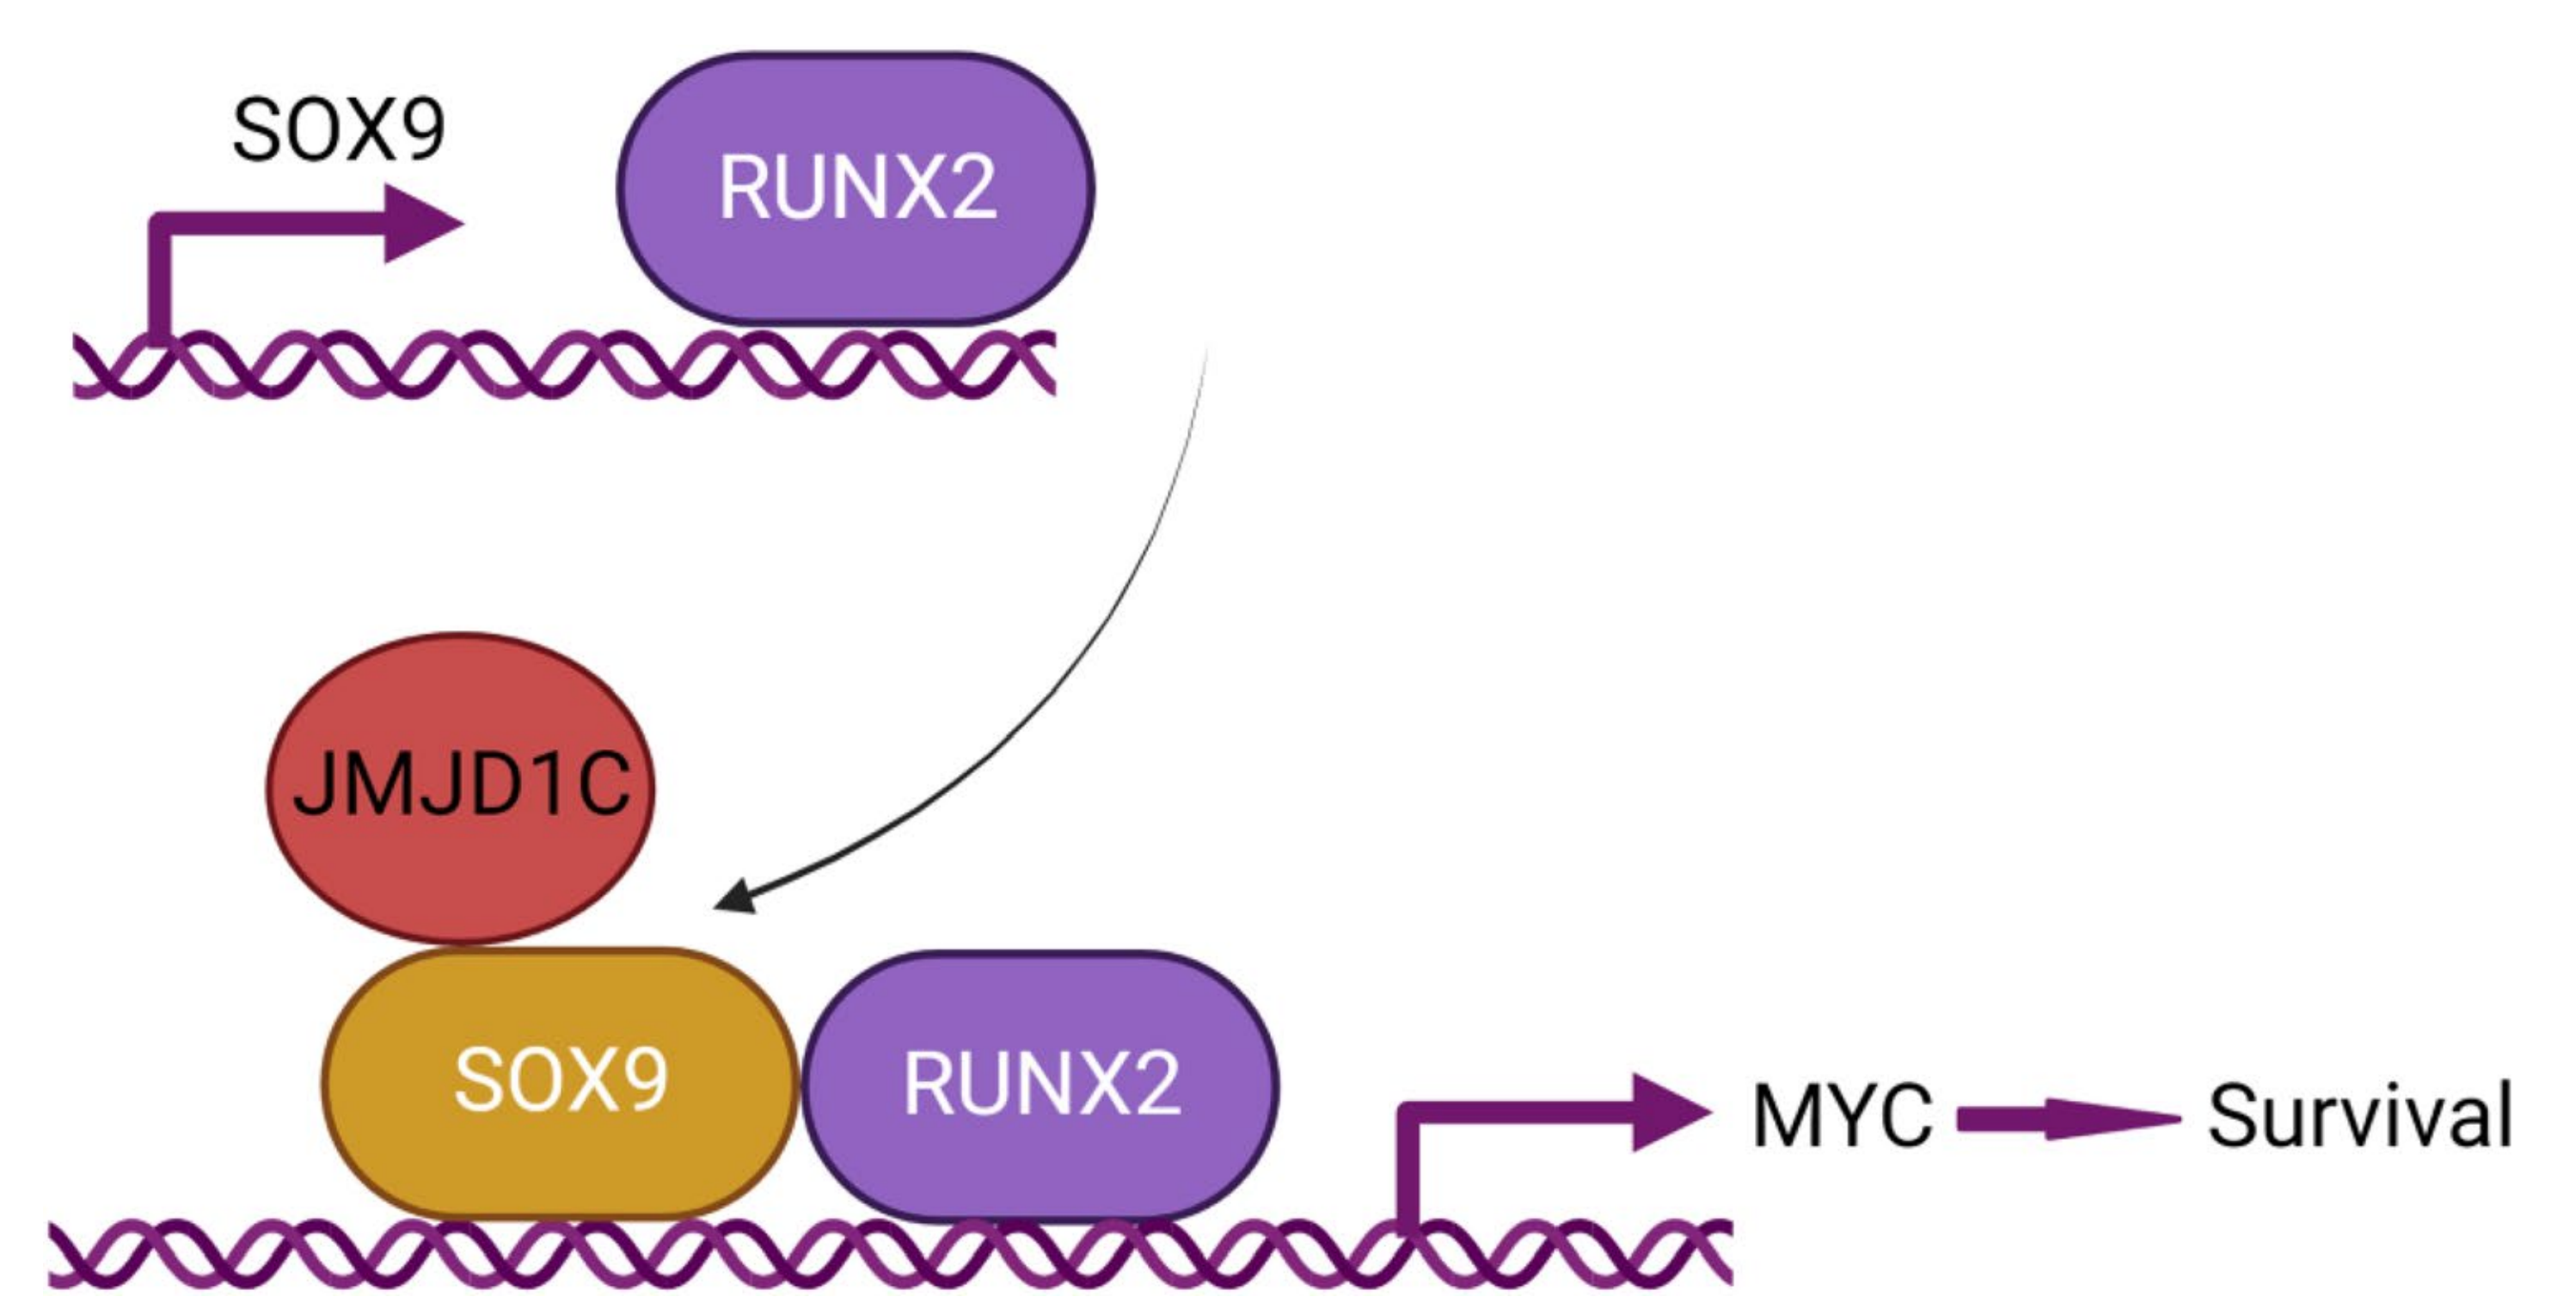 Model of RUNX2-SOX9-JMJD1C network in osteosarcoma.